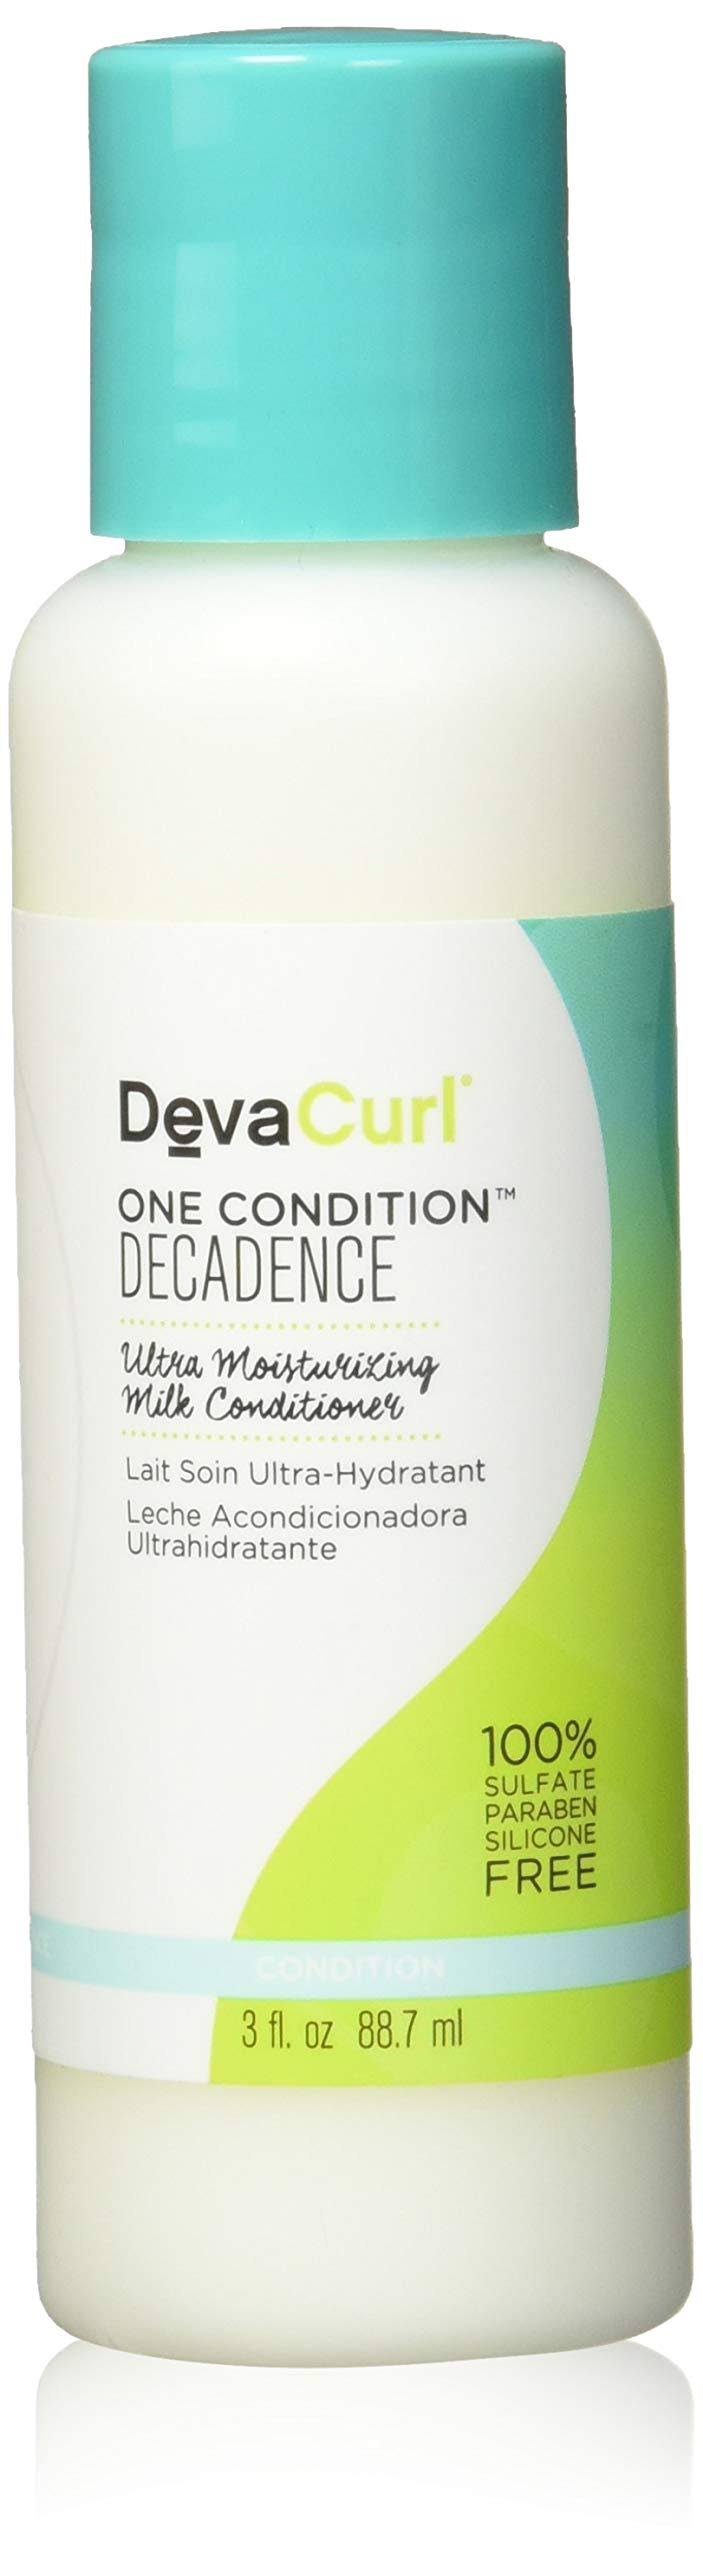 DevaCurl One condition Decadence 3 oz